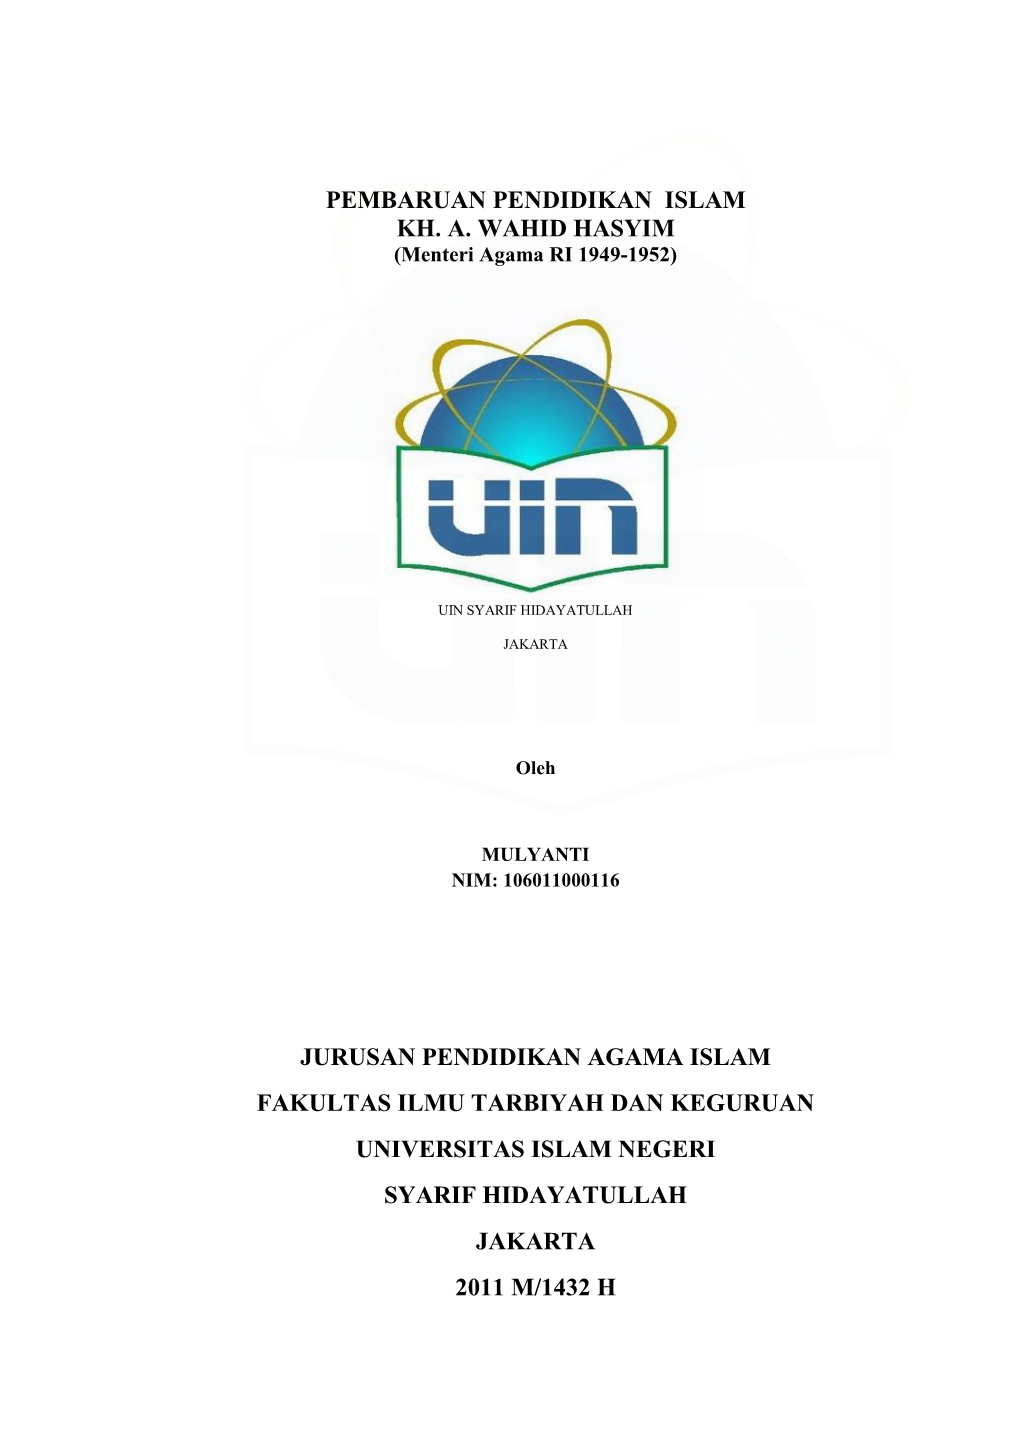 Pembaruan Pendidikan Islam Kh. A. Wahid Hasyim Jurusan Pendidikan Agama Islam Fakultas Ilmu Tarbiyah Dan Keguruan Universitas